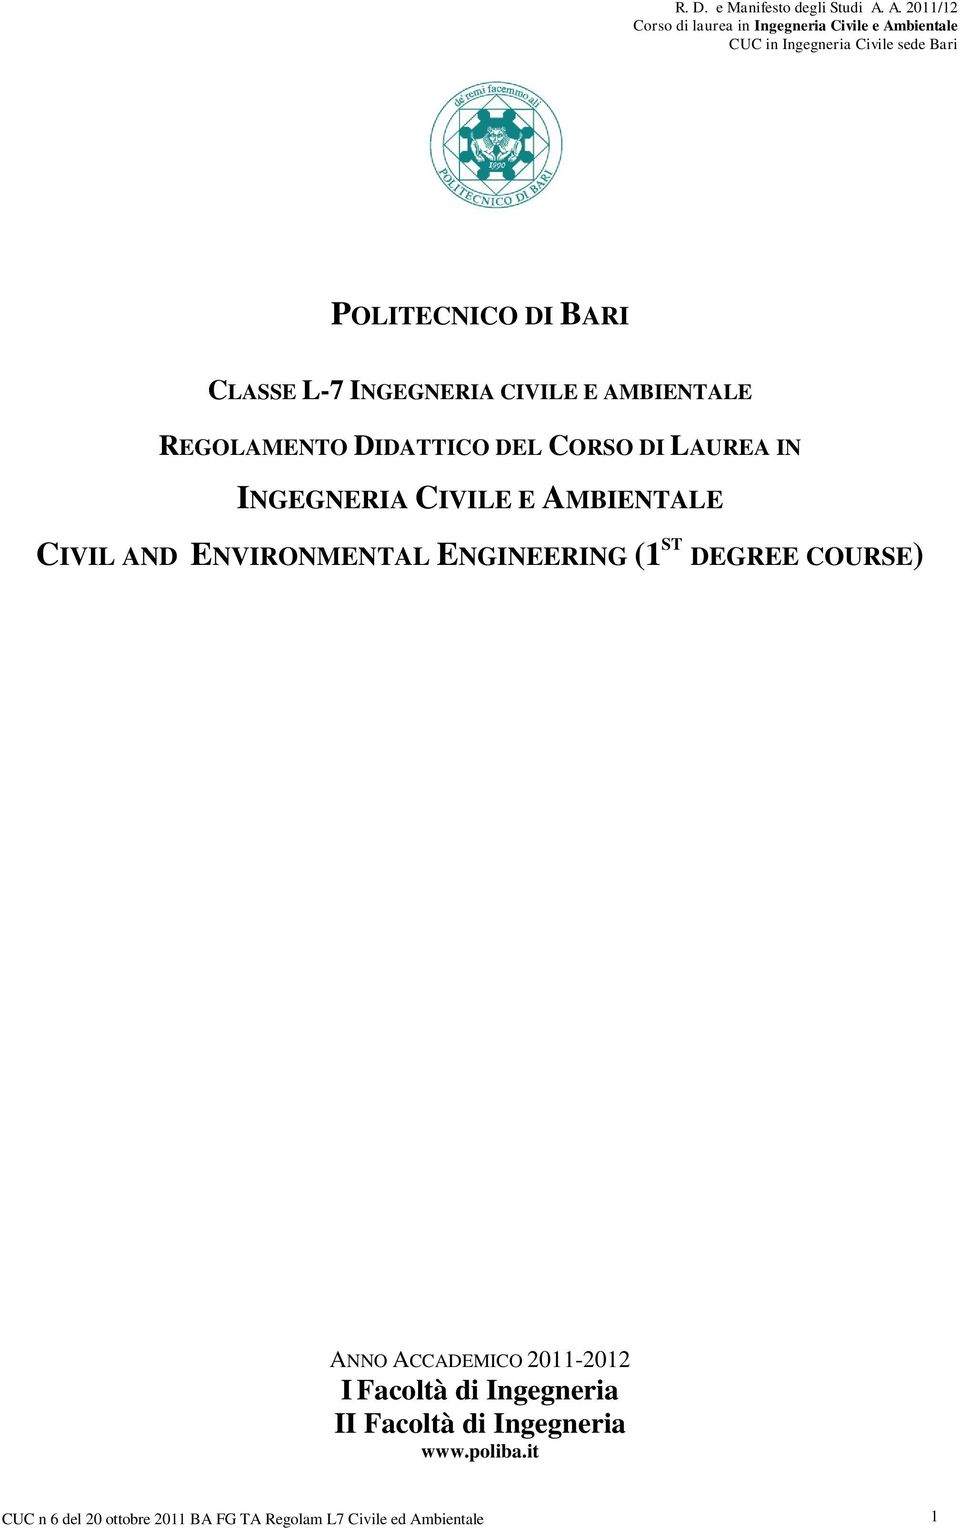 CORSO DI LAUREA IN INGEGNERIA CIVILE E AMBIENTALE CIVIL AND ENVIRONMENTAL ENGINEERING (1 ST